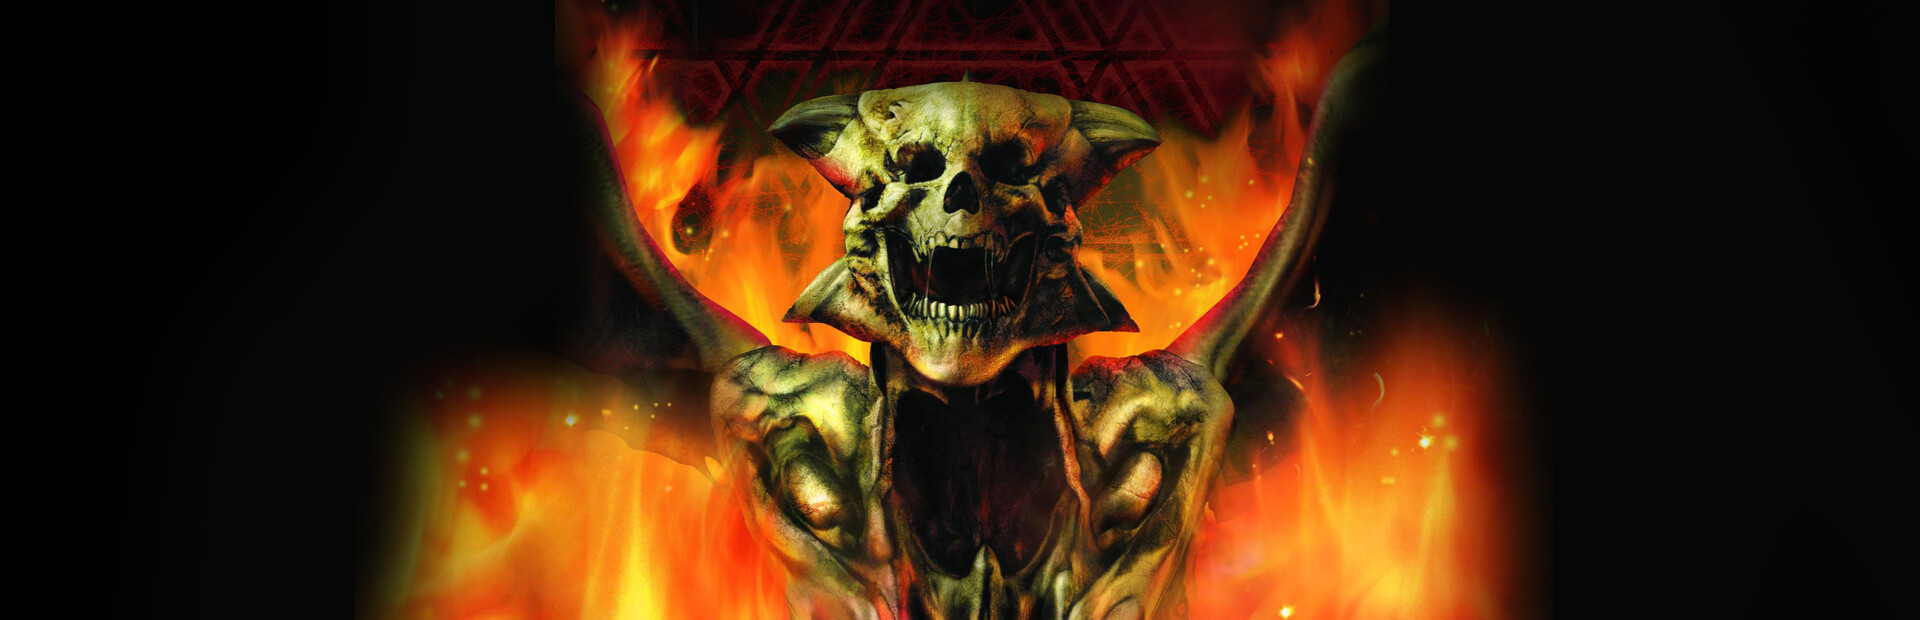 DOOM 3: Resurrection of Evil cover image